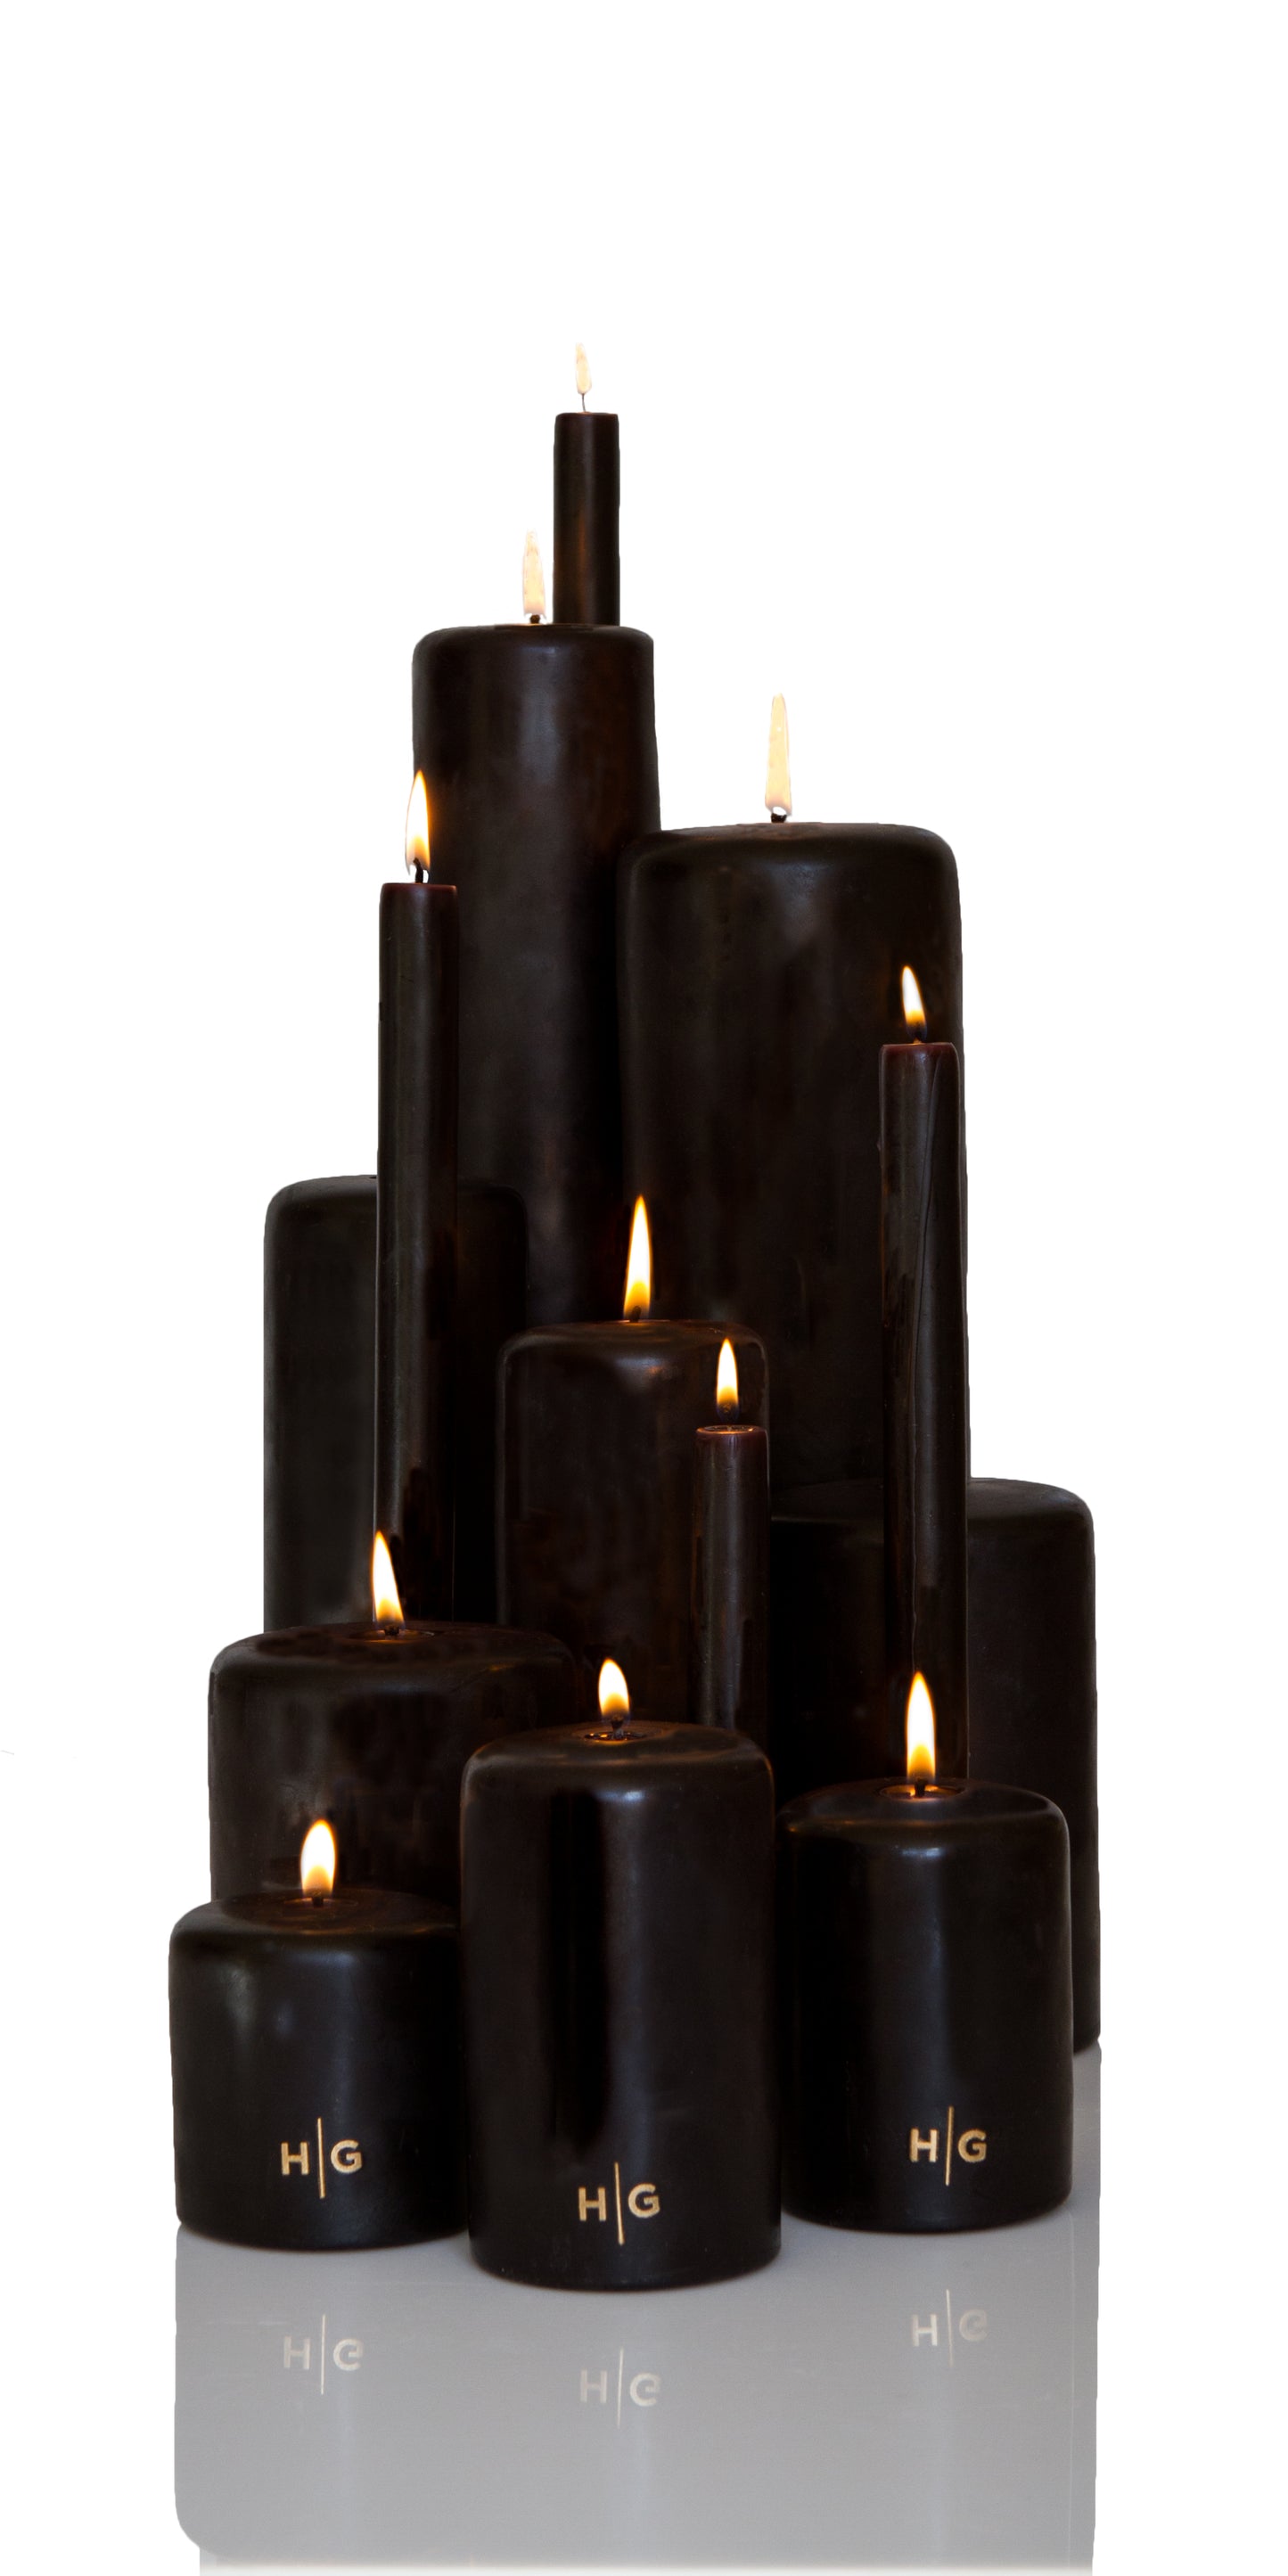 Stylish black taper candles handmade